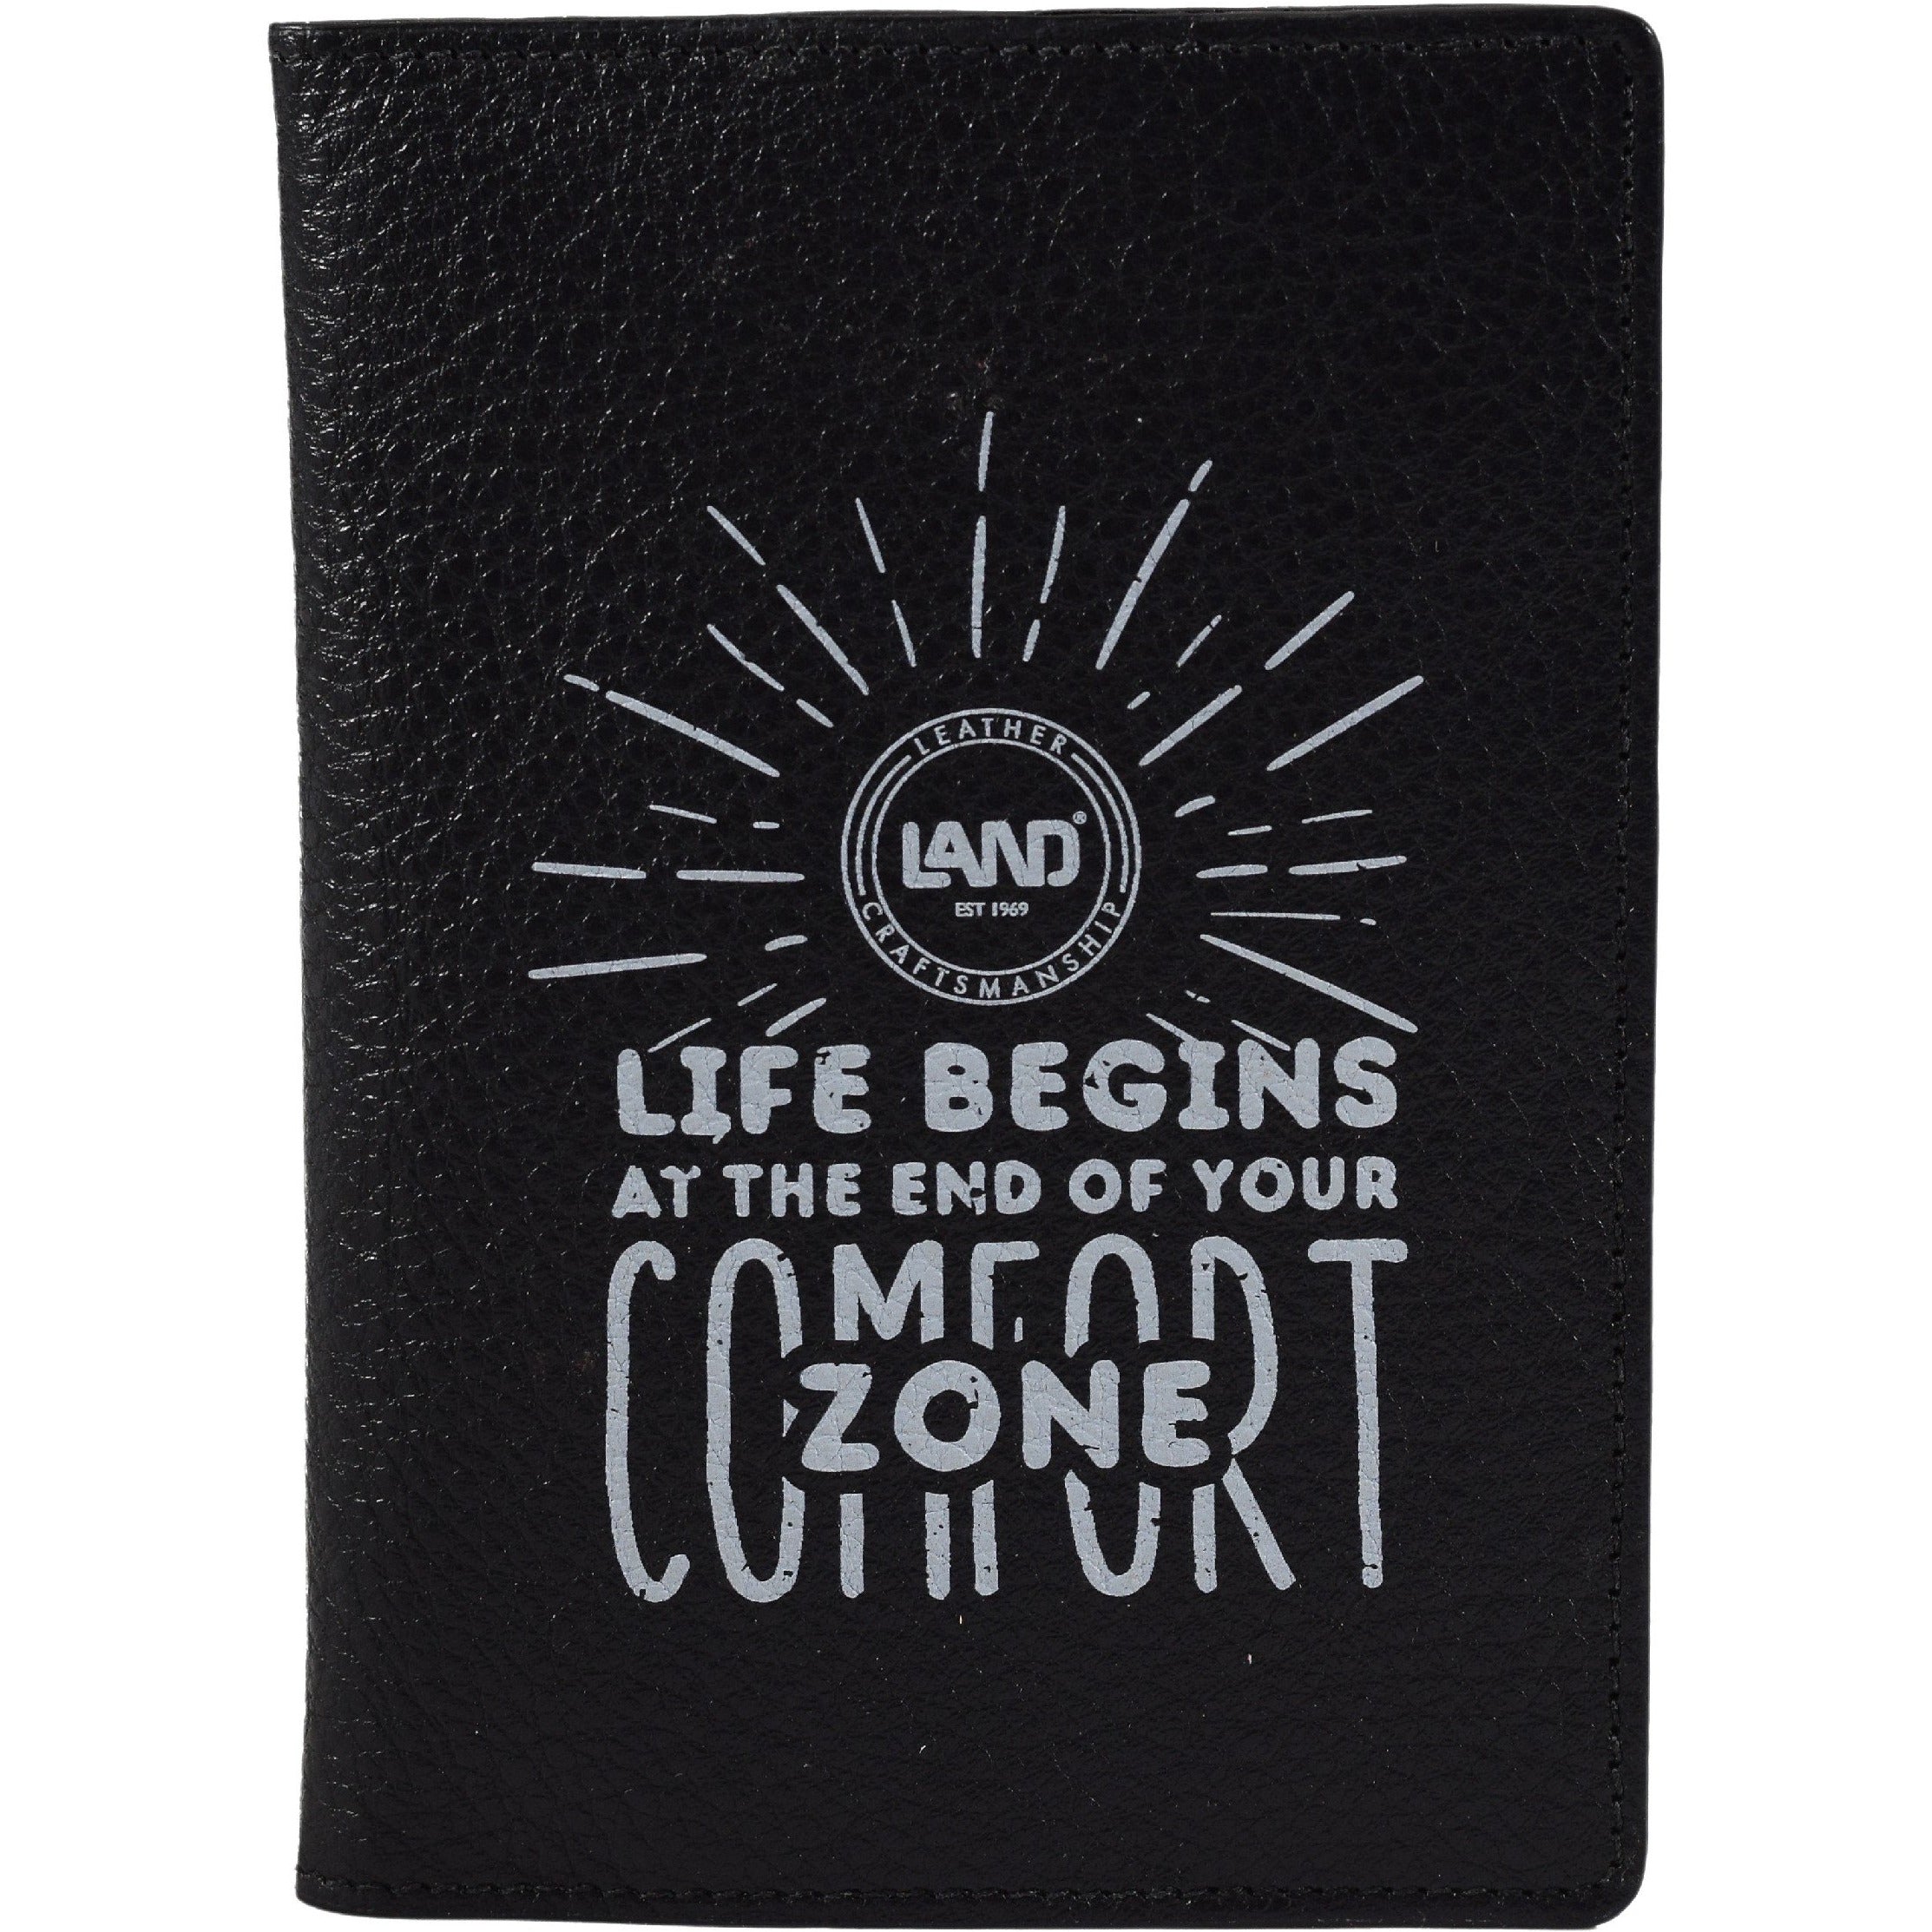 Comfort Zone Passport Set - LAND Leather Goods